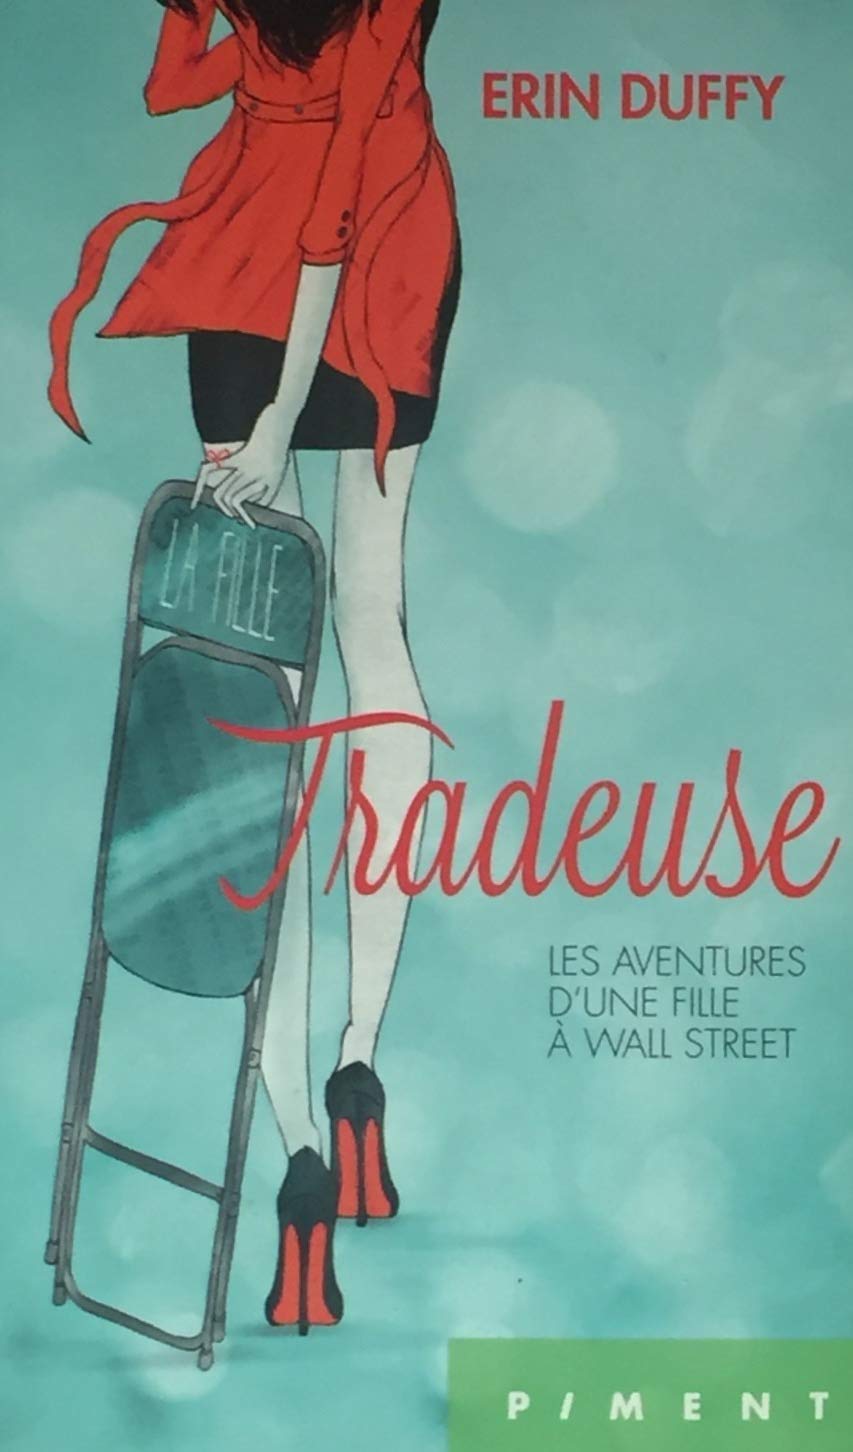 Livre ISBN 229807786X Piment : Tradeuse : Les aventures d'une fille à Wall Street (Erin Duffy)